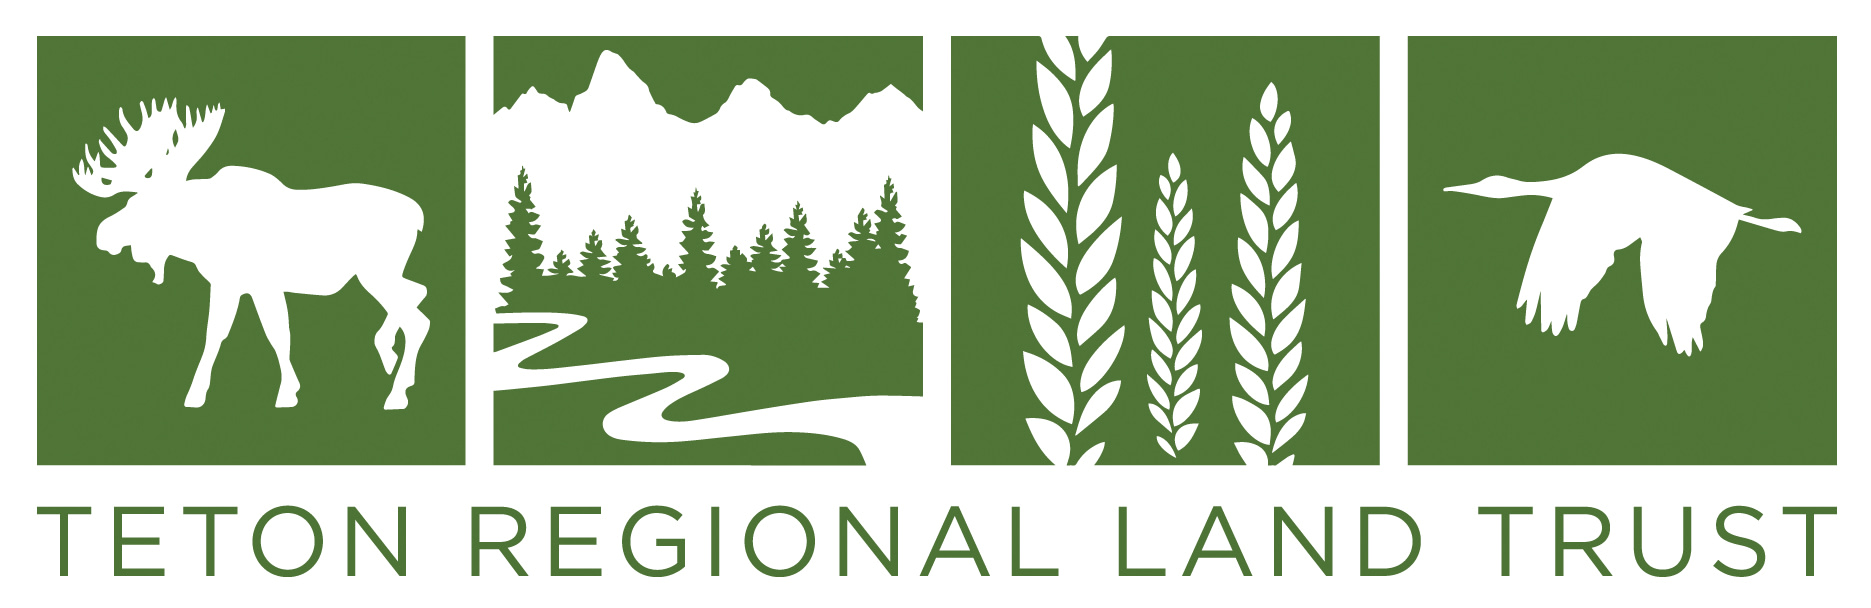 Teton Regional Land Trust